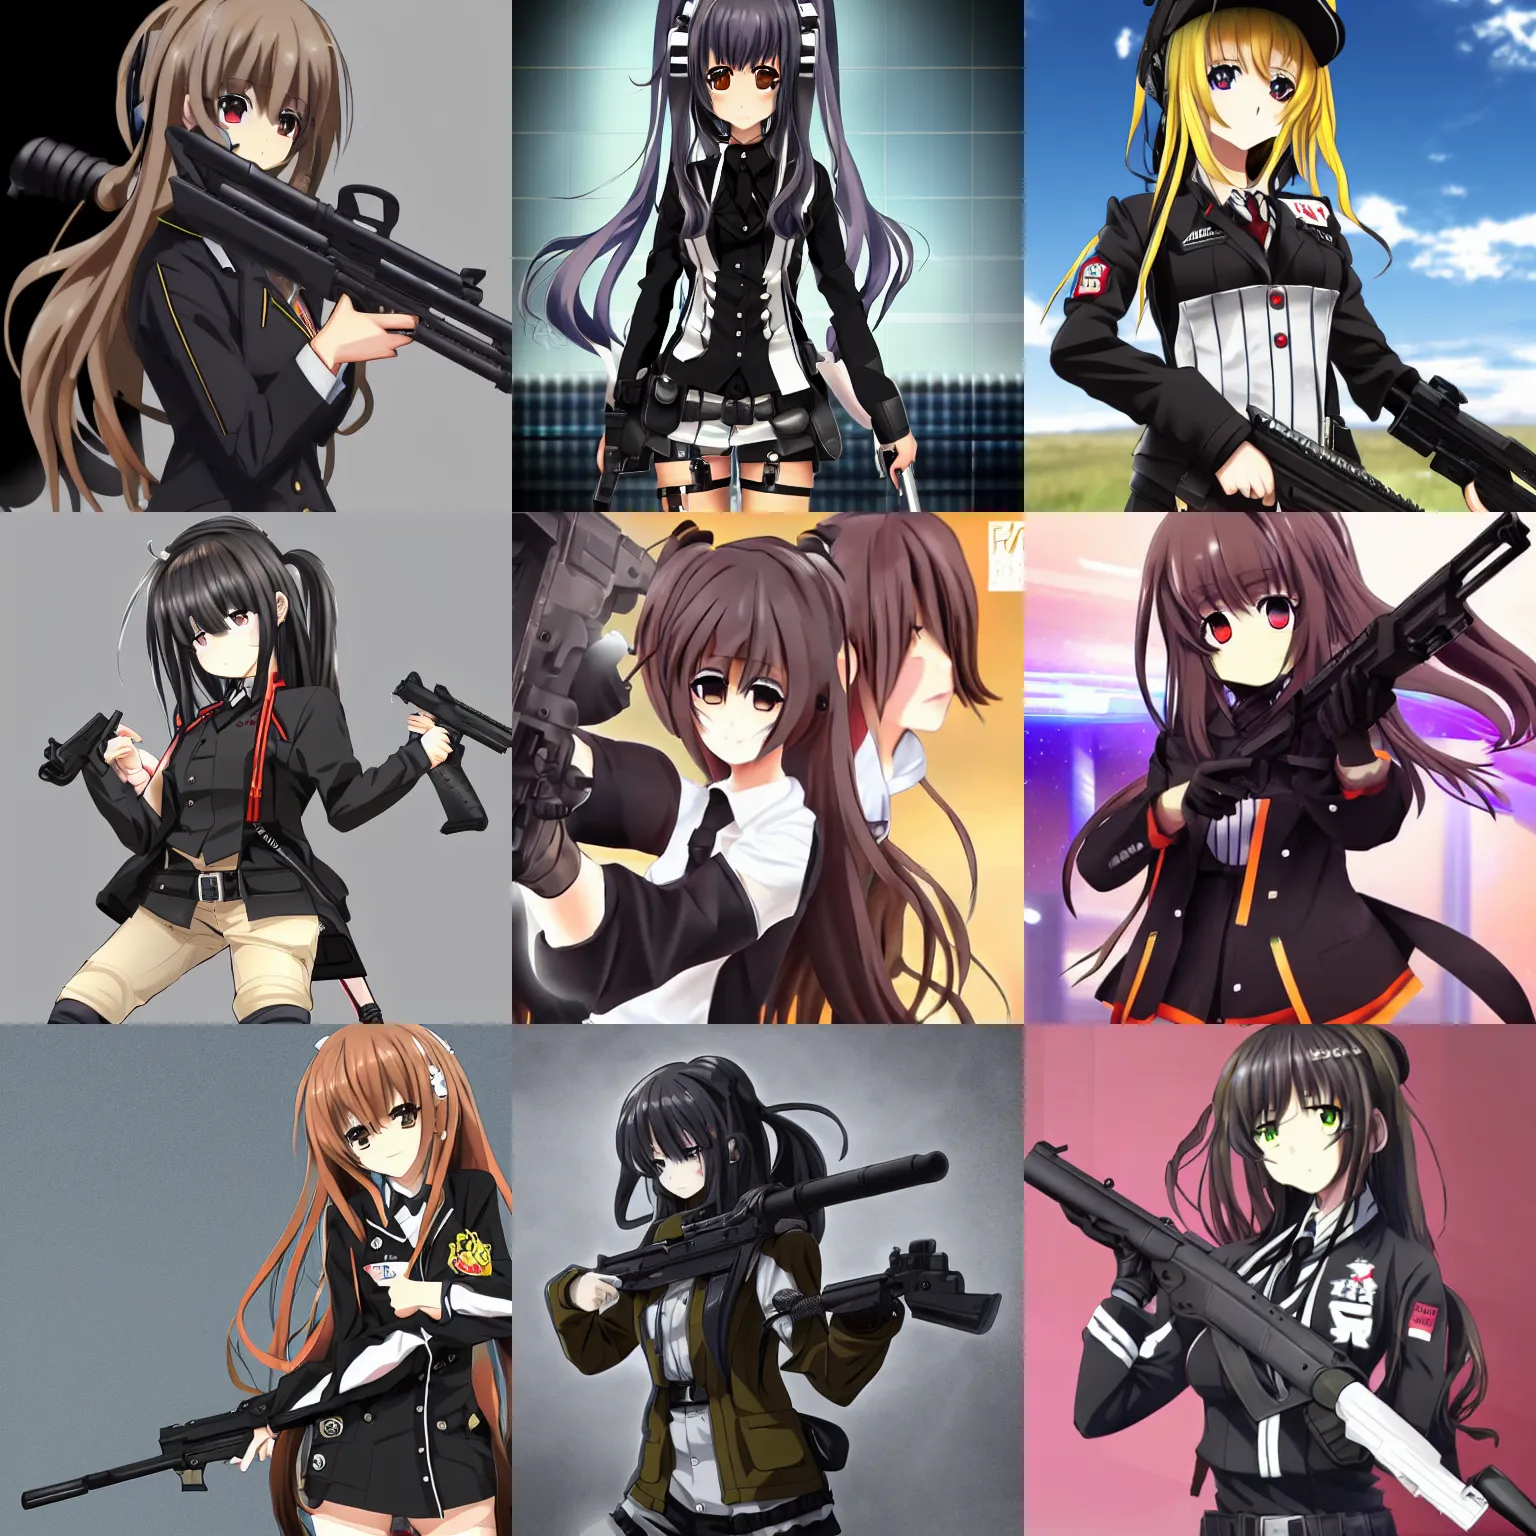 Prompt: anime character ump 9 from girls'frontline, holding ump 9 gun